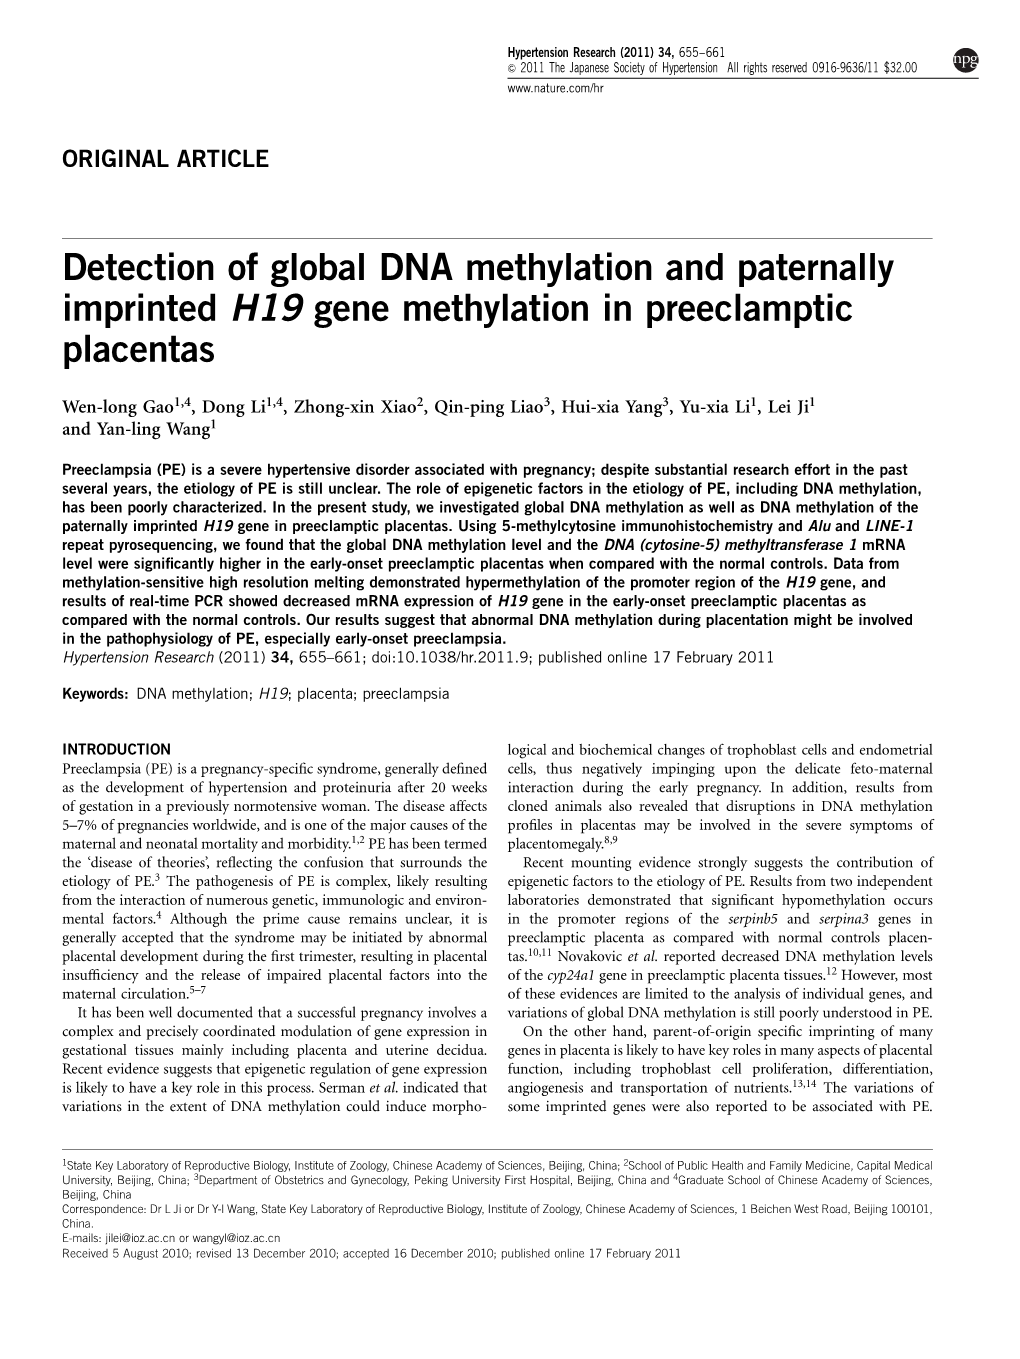 Detection of Global DNA Methylation and Paternally Imprinted H19 Gene Methylation in Preeclamptic Placentas